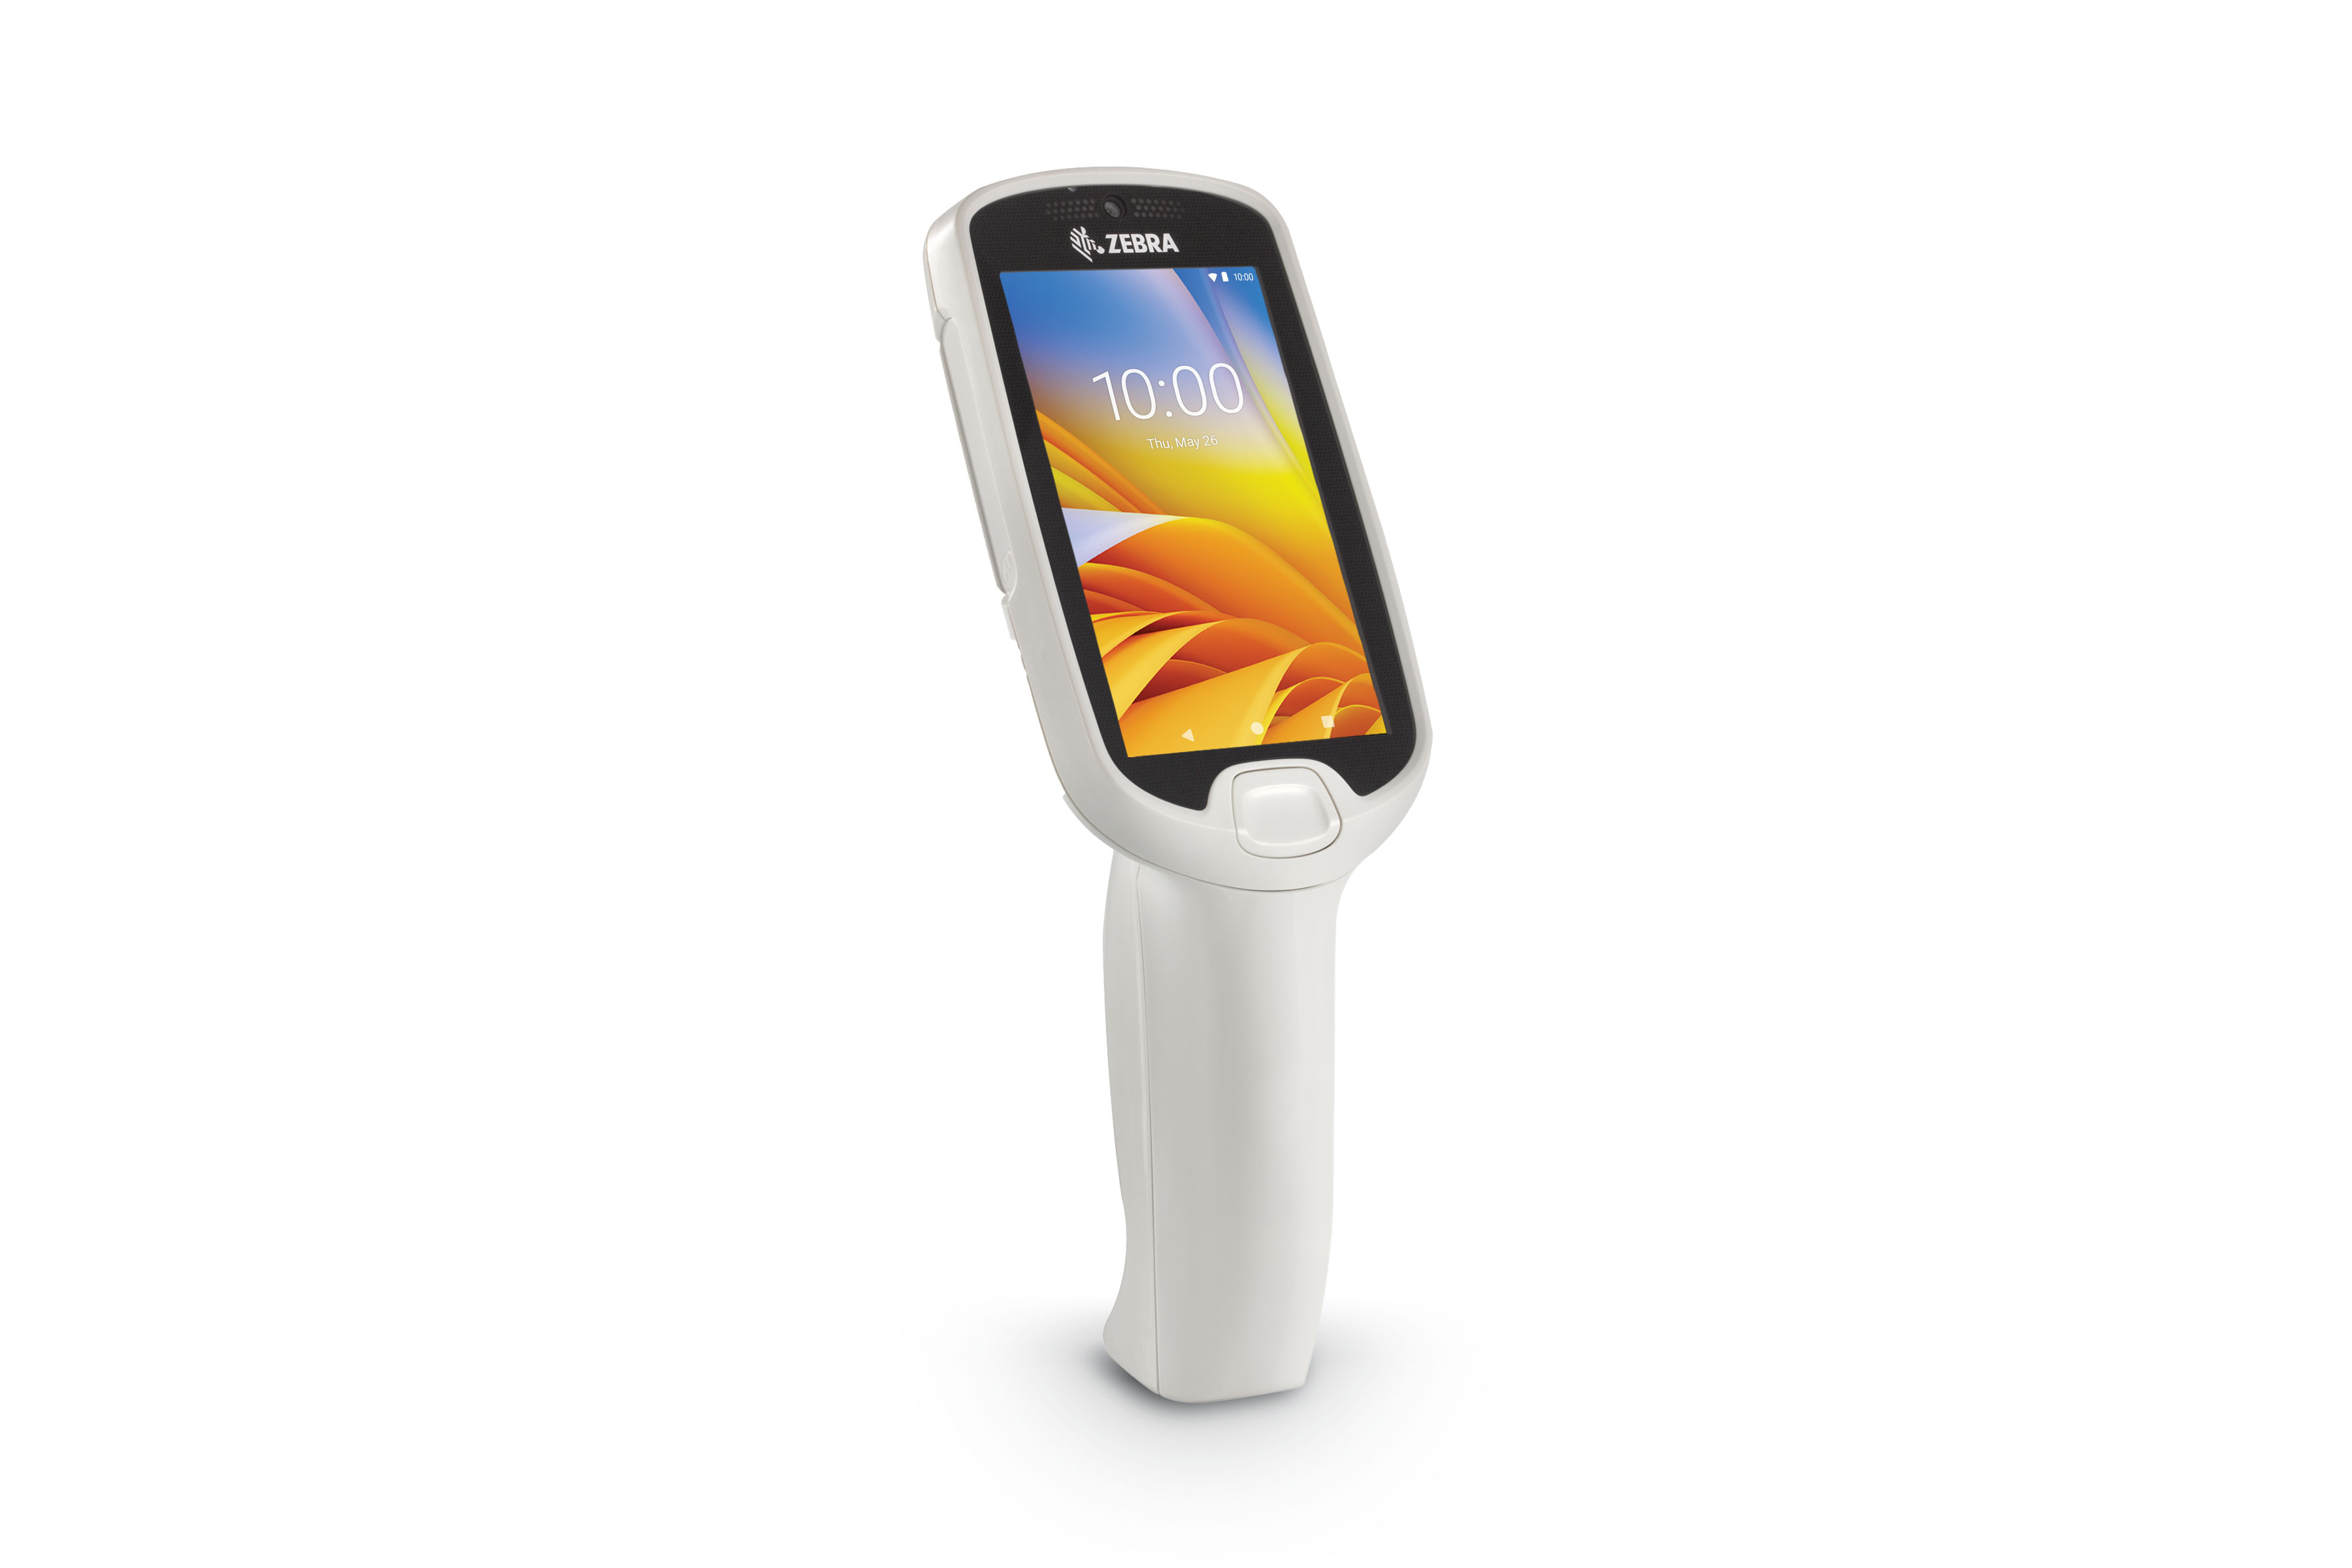 Scanner portable - Achat scanner mobile professionnel